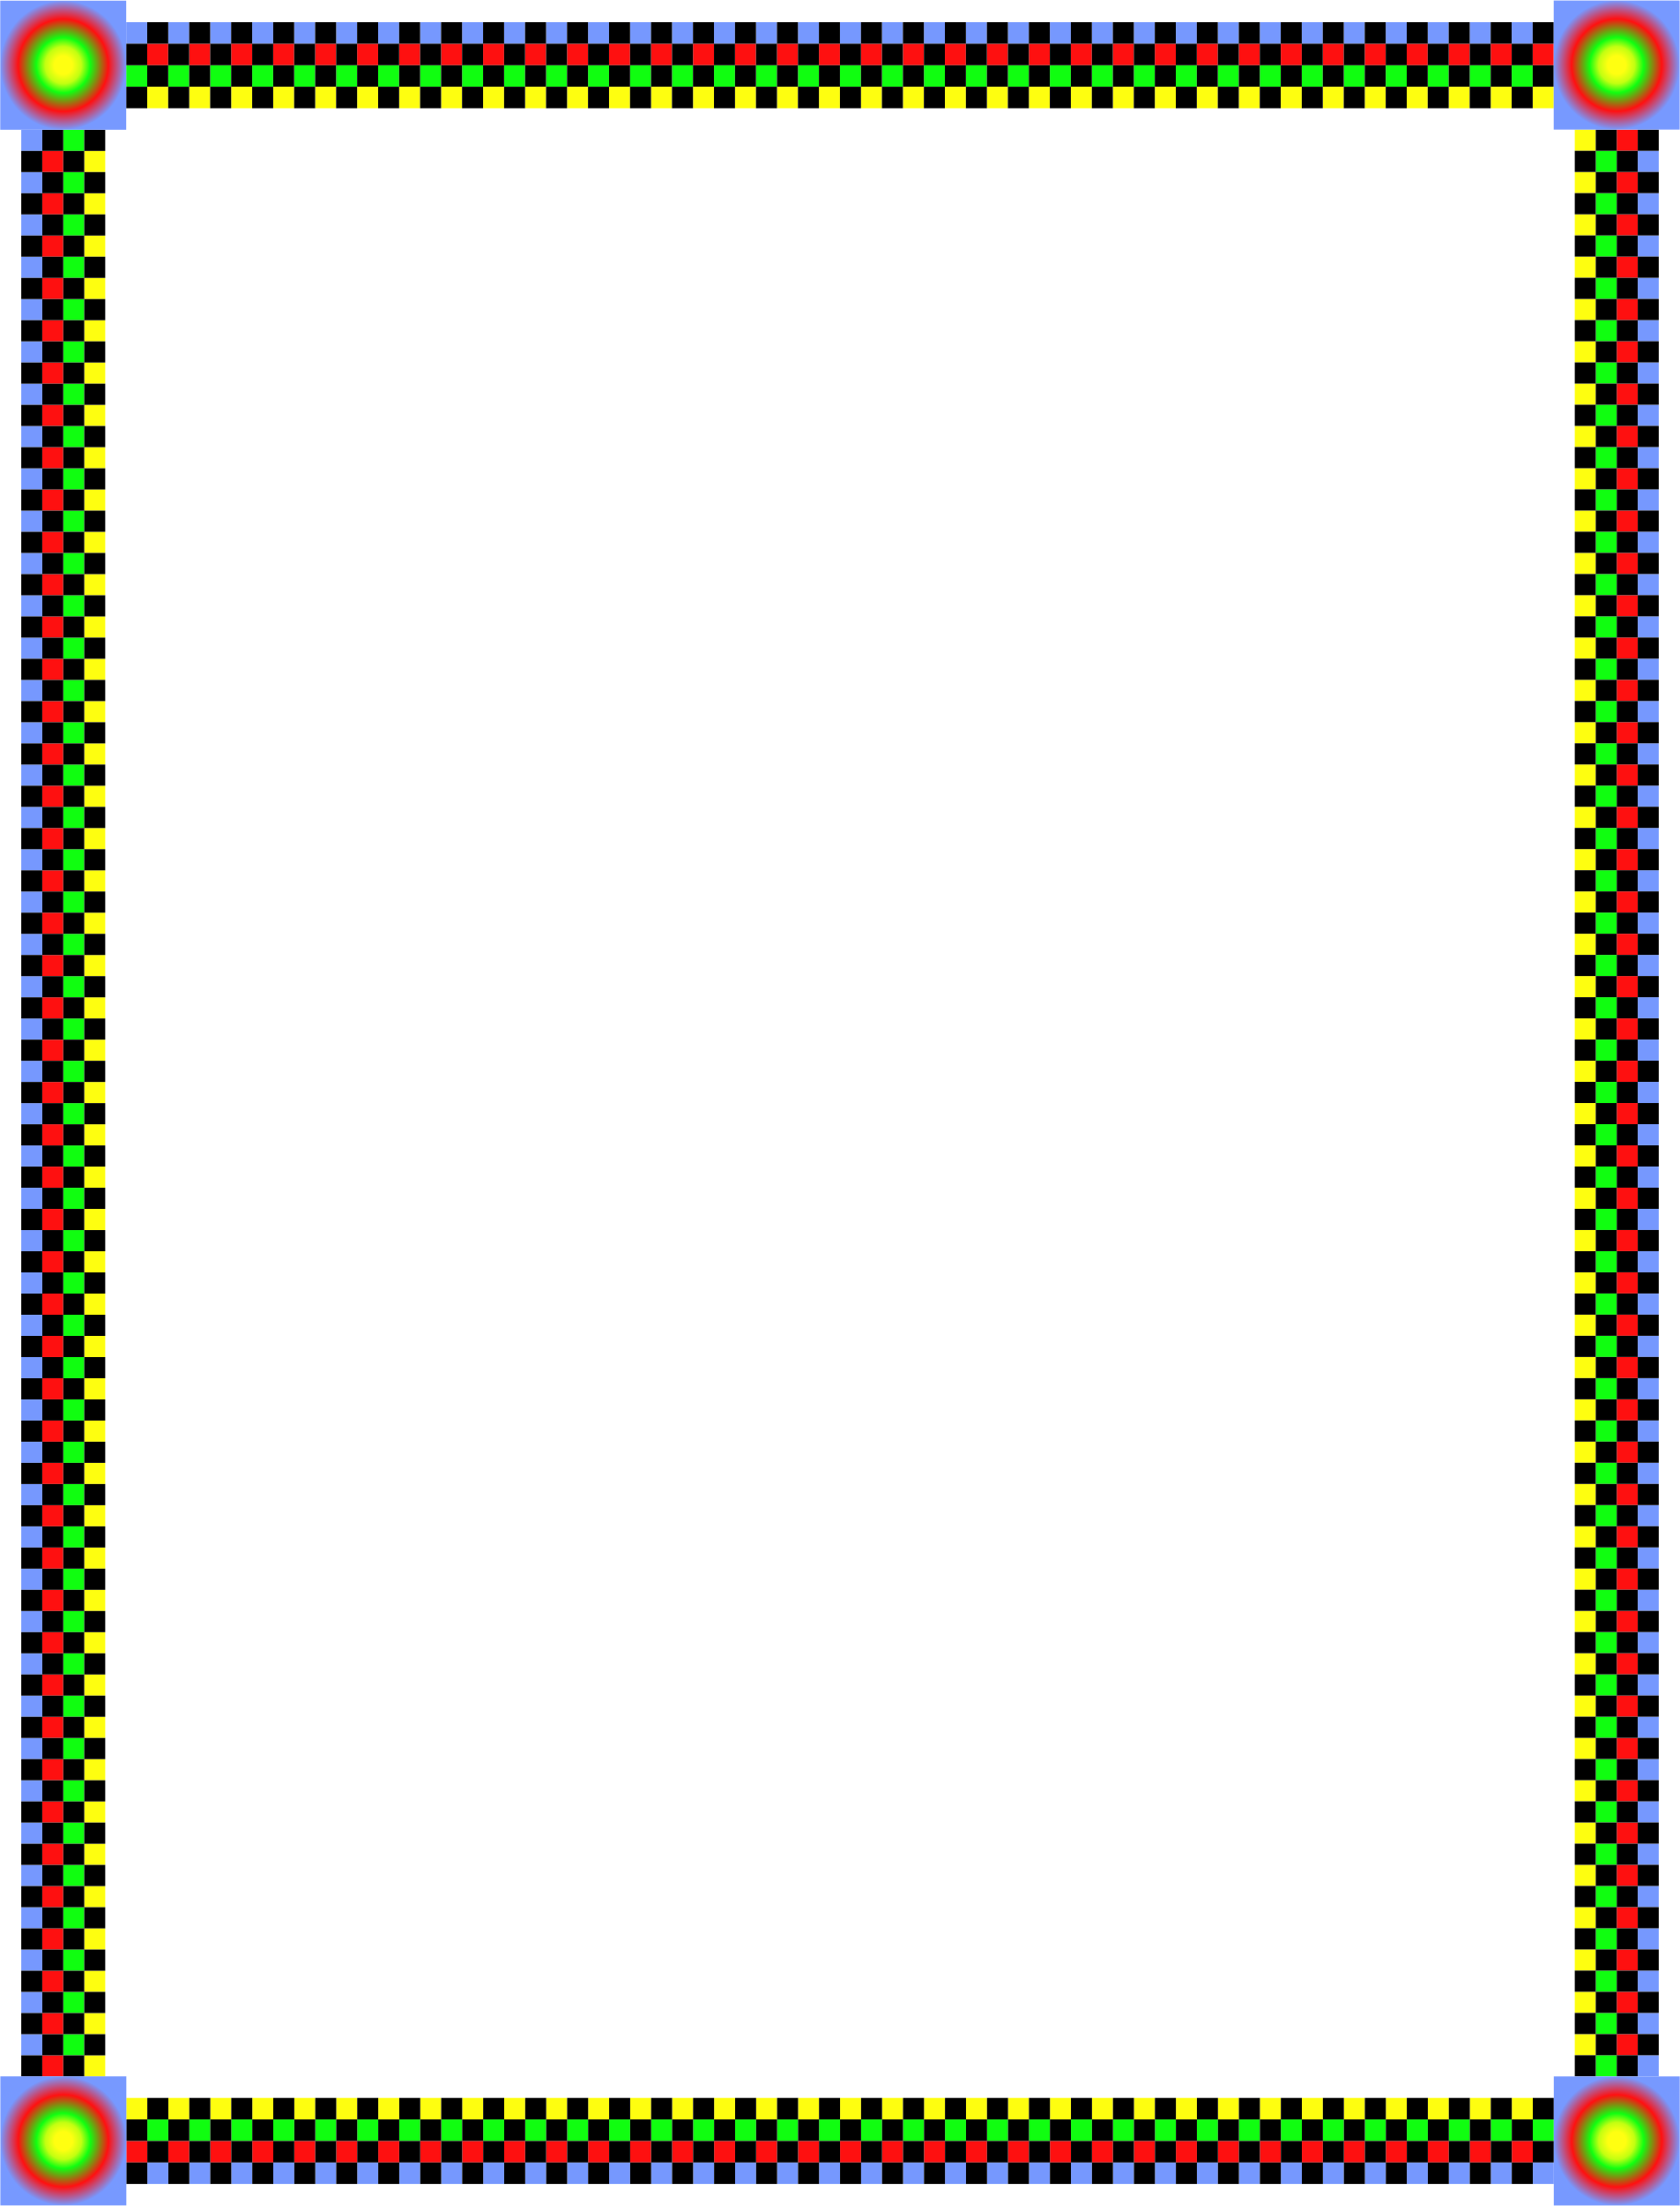 Dots Border - Portable Network Graphics (1746x2292)